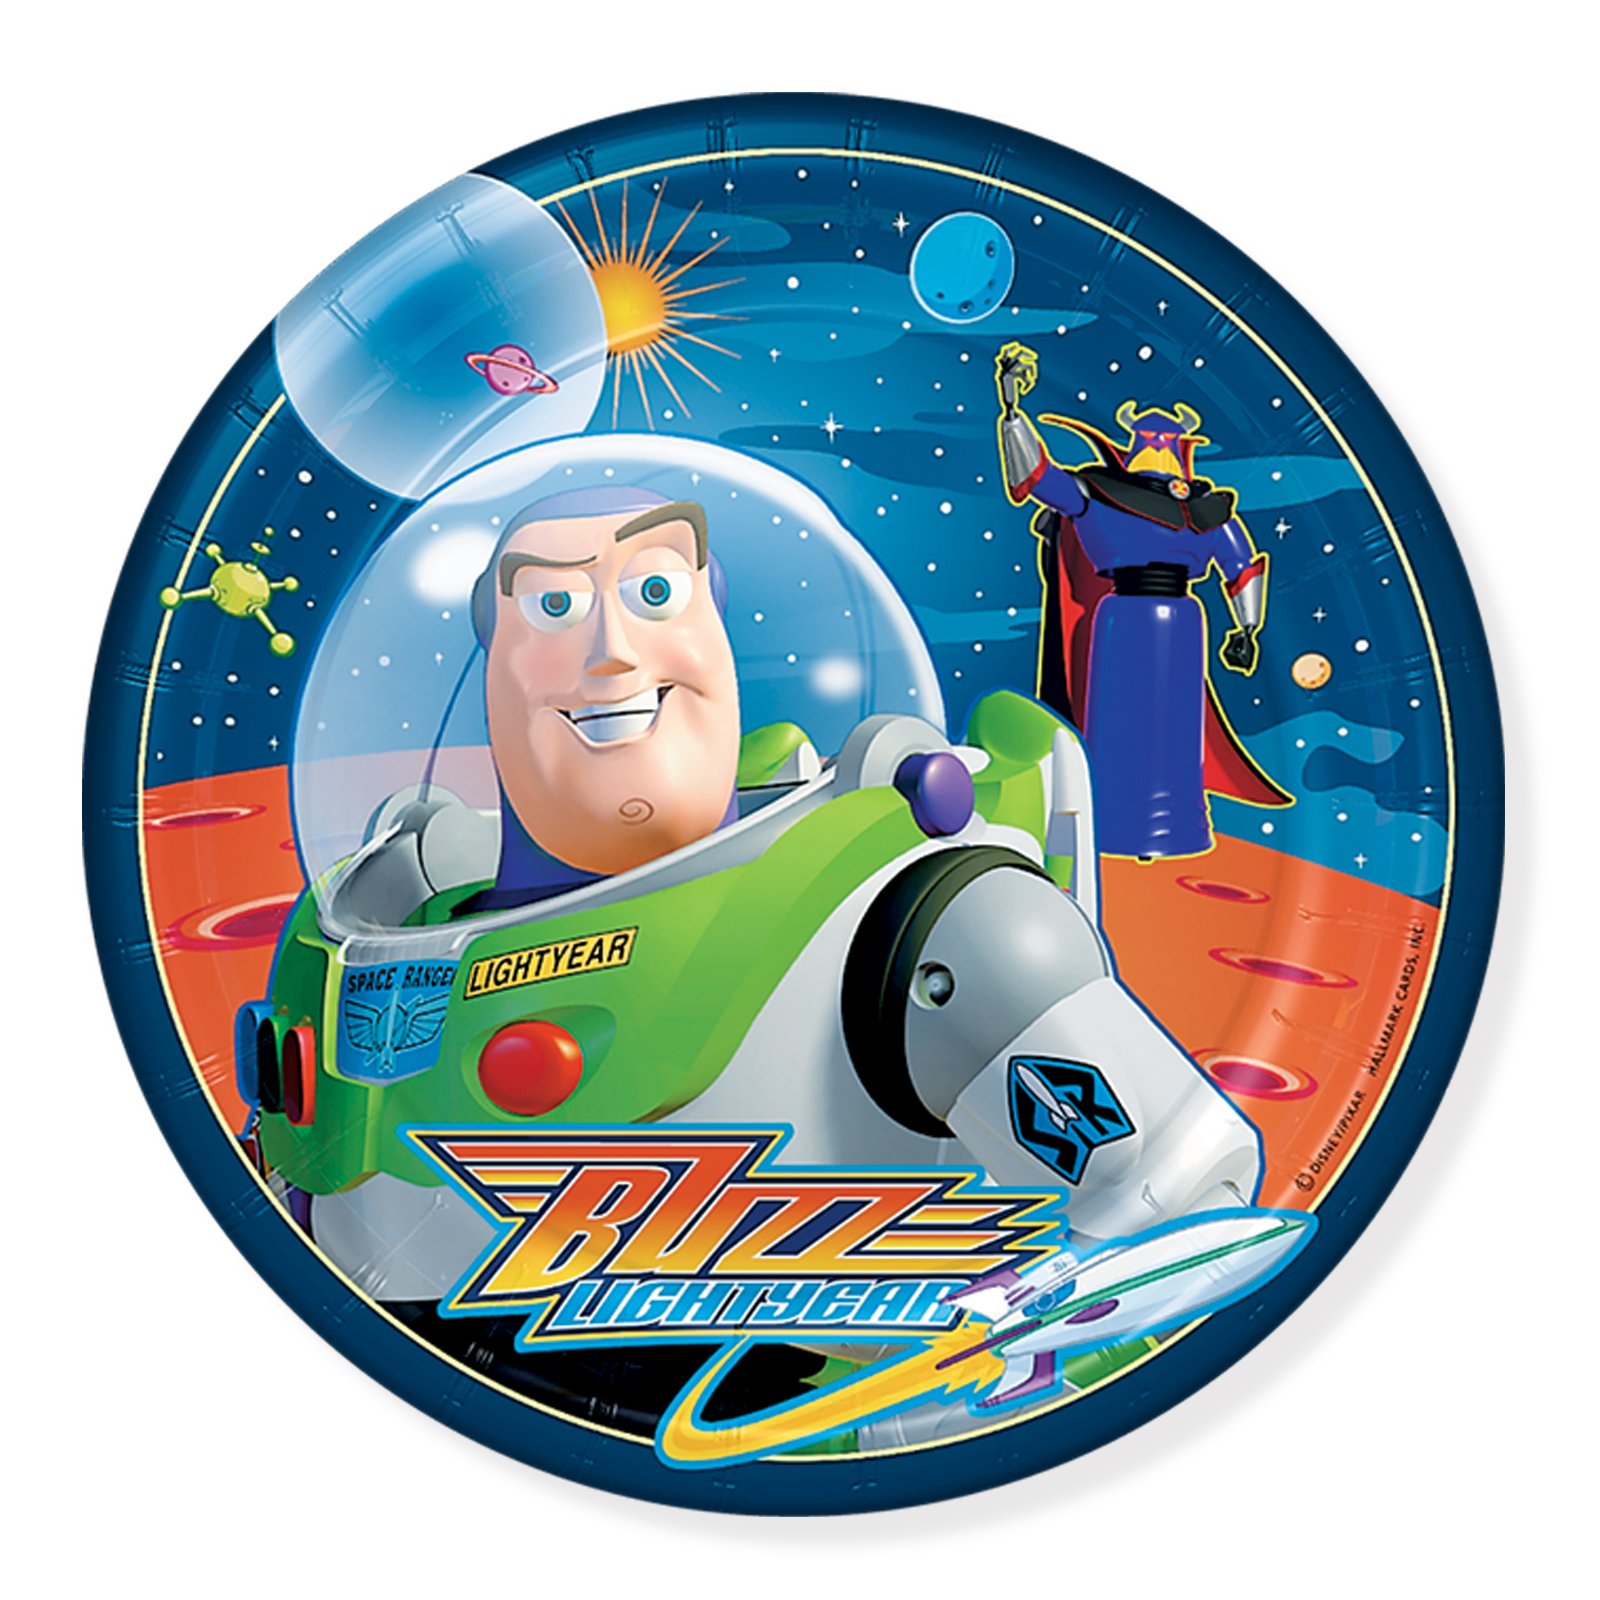 Buzz-Lightyear-cd-cover 1600